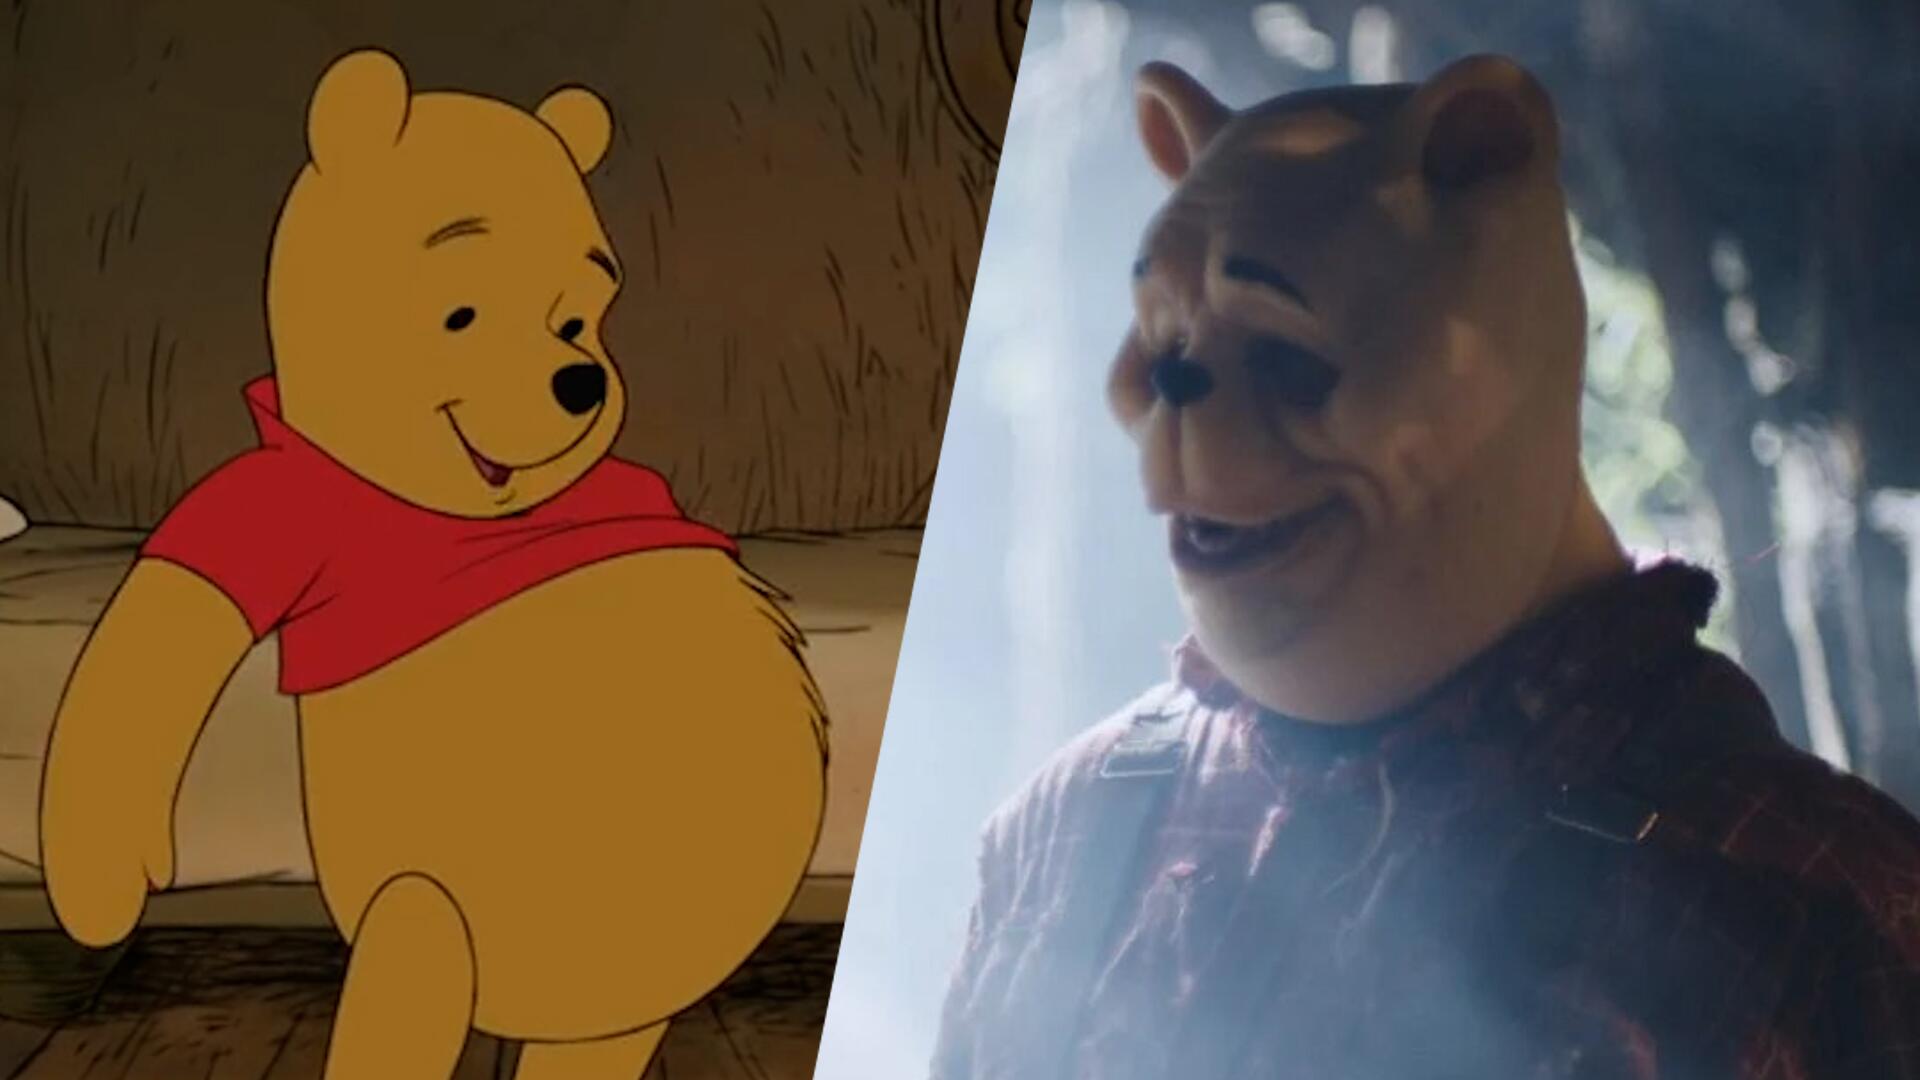 Winnie The Pooh!